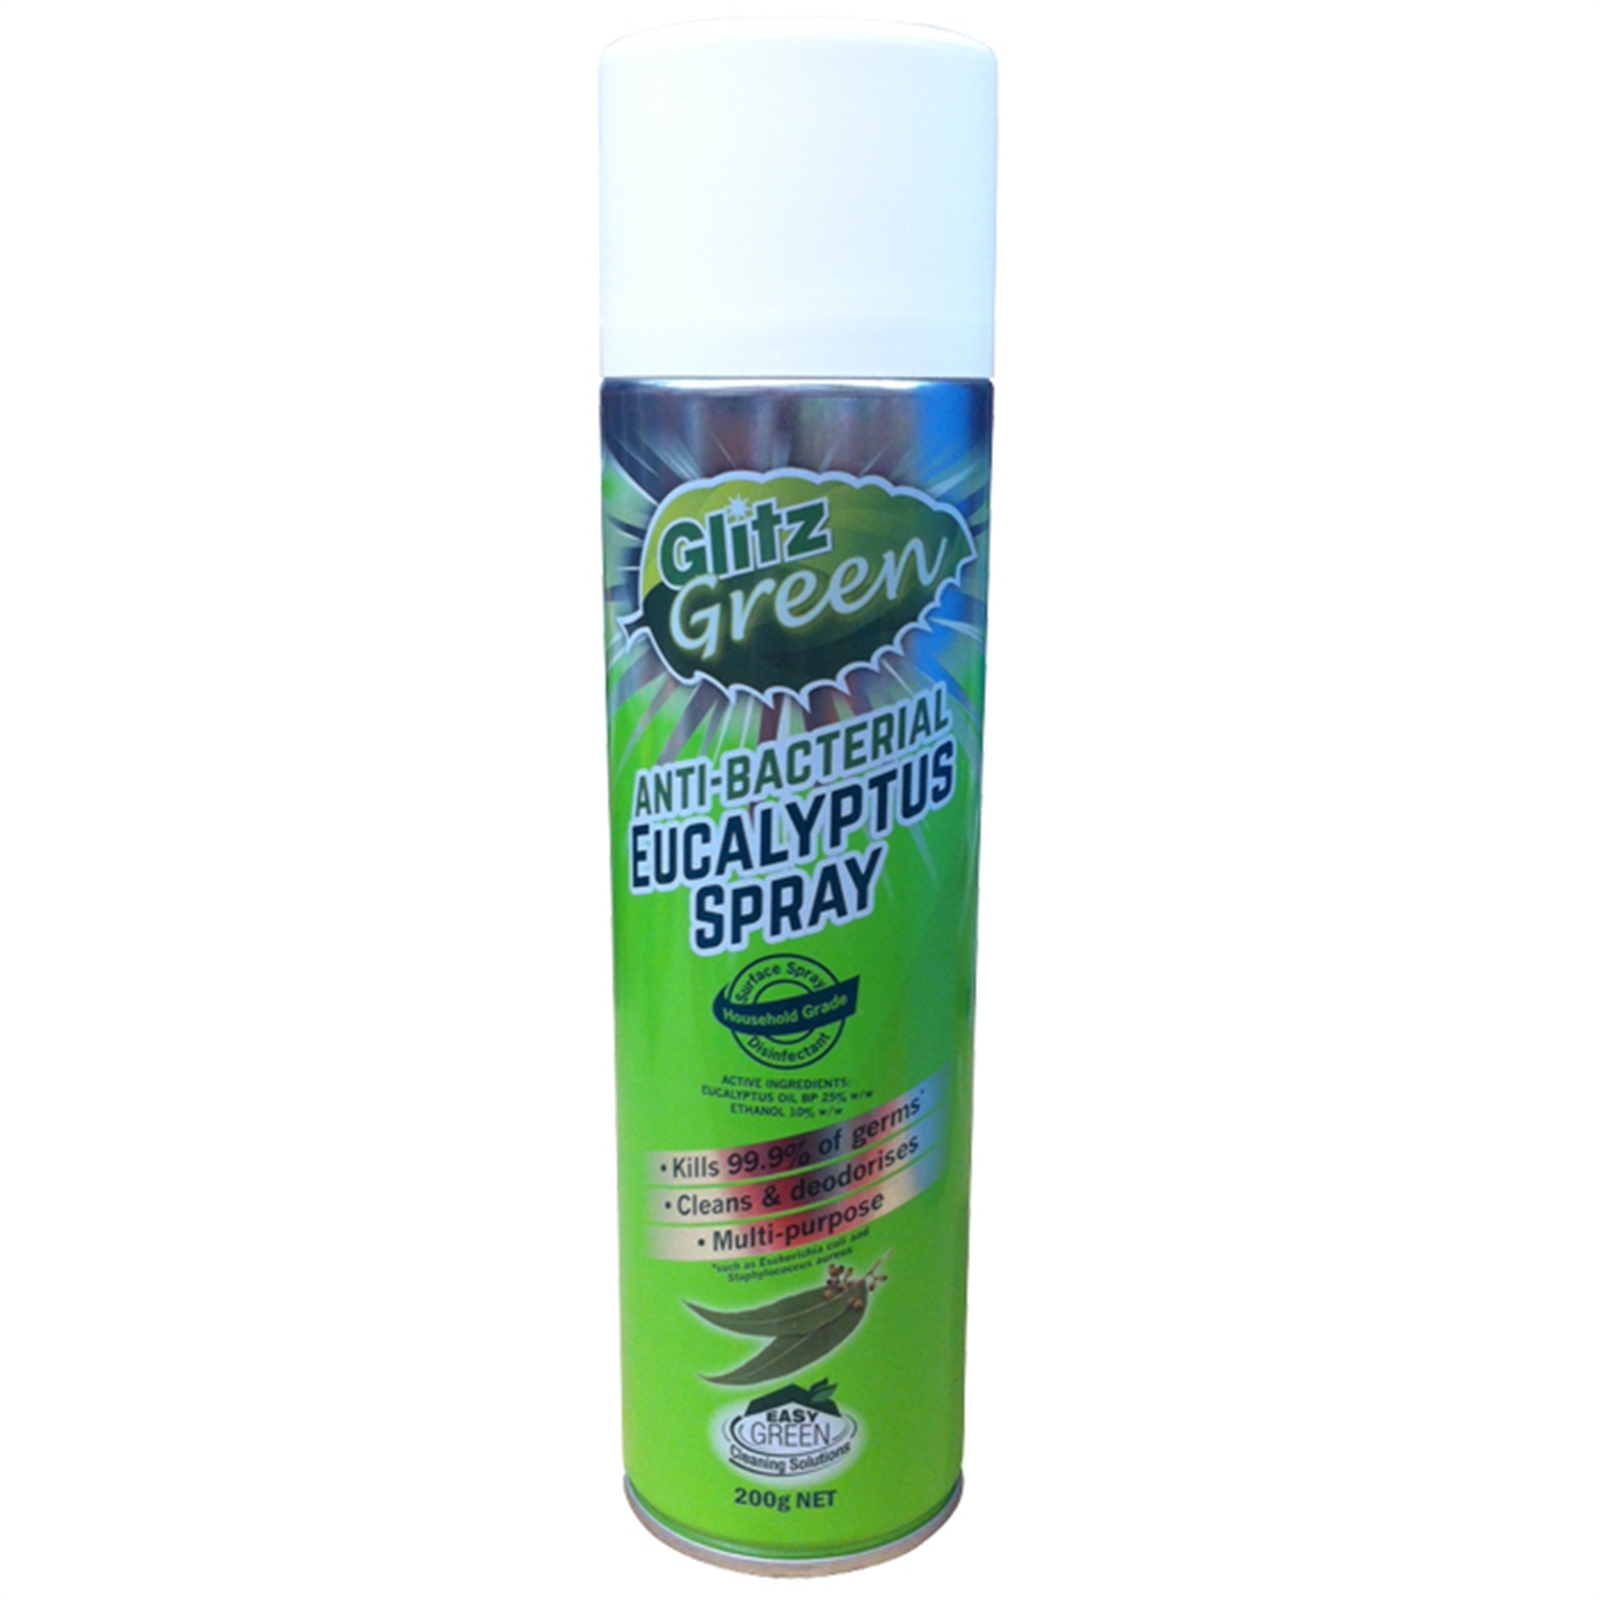 Glitz 200g Green Antibacterial Eucalyptus Spray